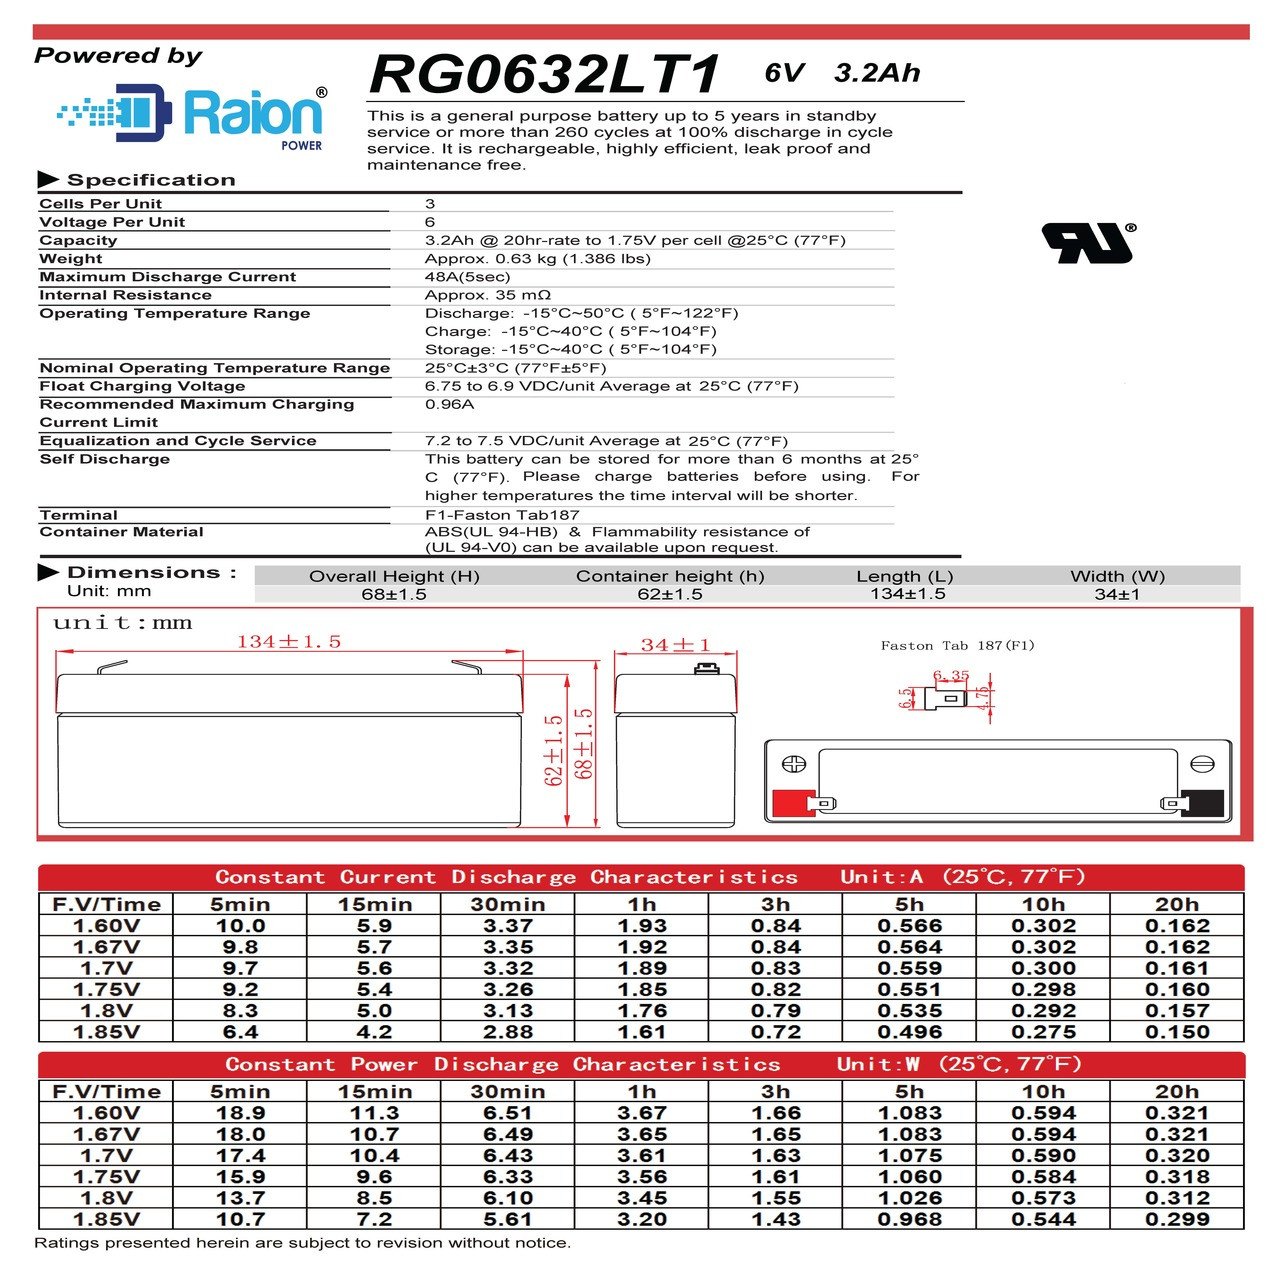 Raion Power RG0632LT1 6V 3.2Ah Battery Data Sheet for Alaris Medical 580 Plus Infusion Pump